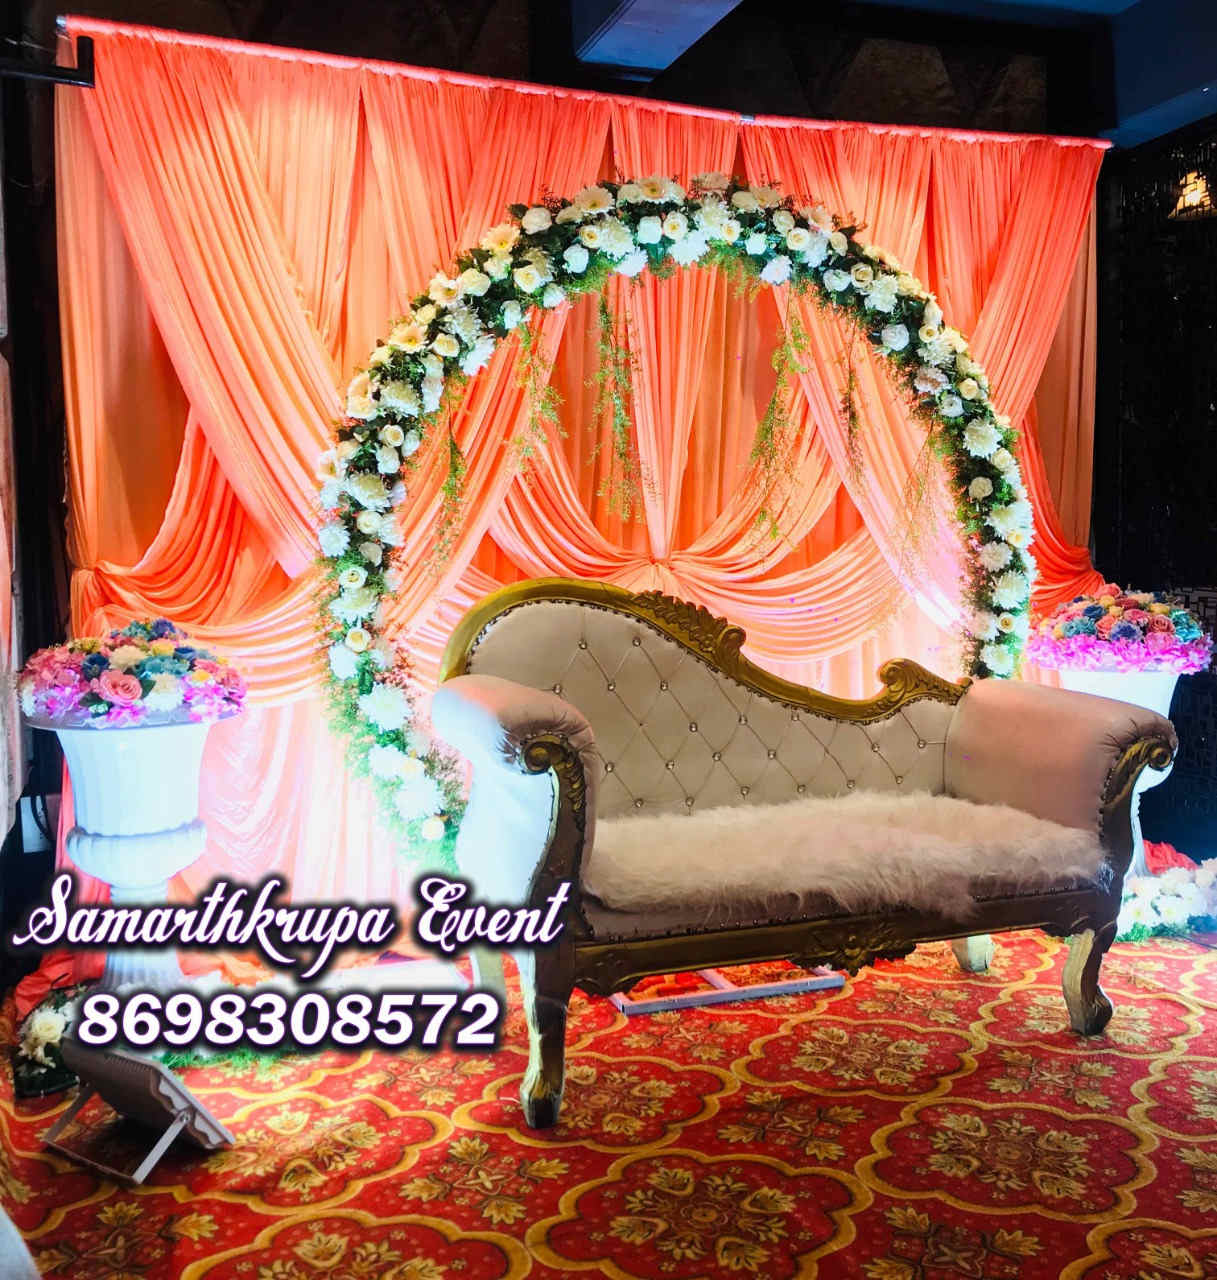 Wedding-Decoration-Pune,--Samarthkrupa-Event